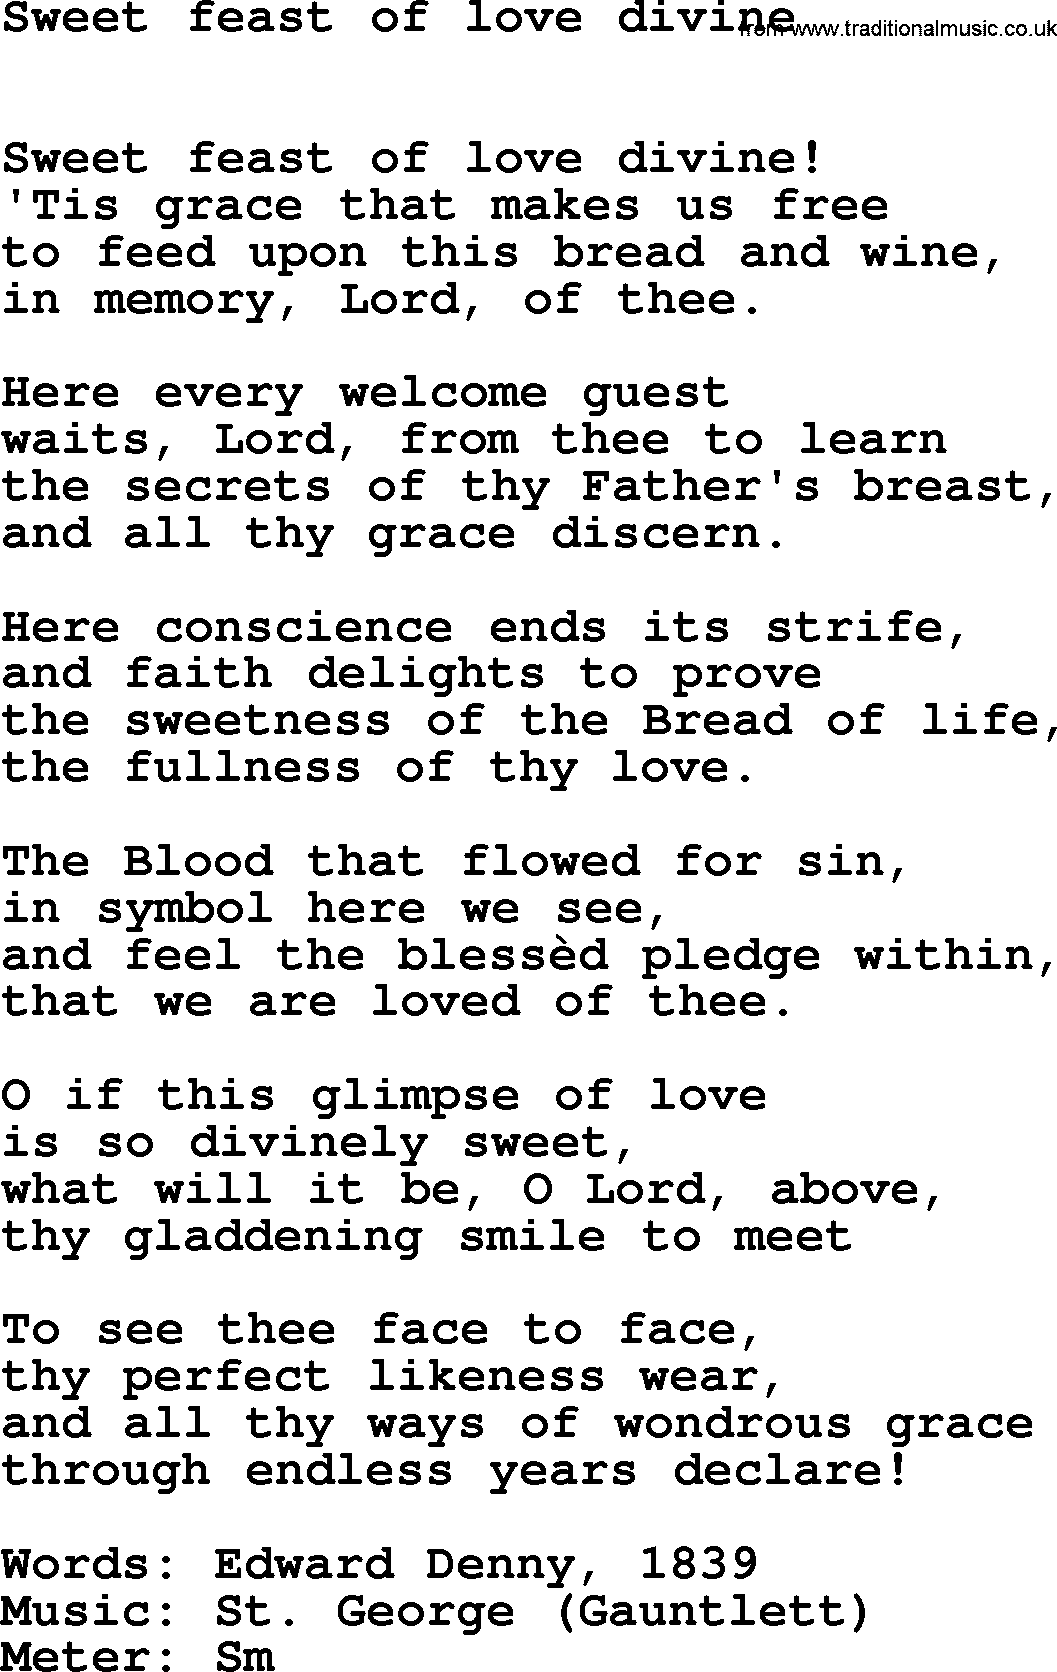 Book of Common Praise Hymn: Sweet Feast Of Love Divine.txt lyrics with midi music